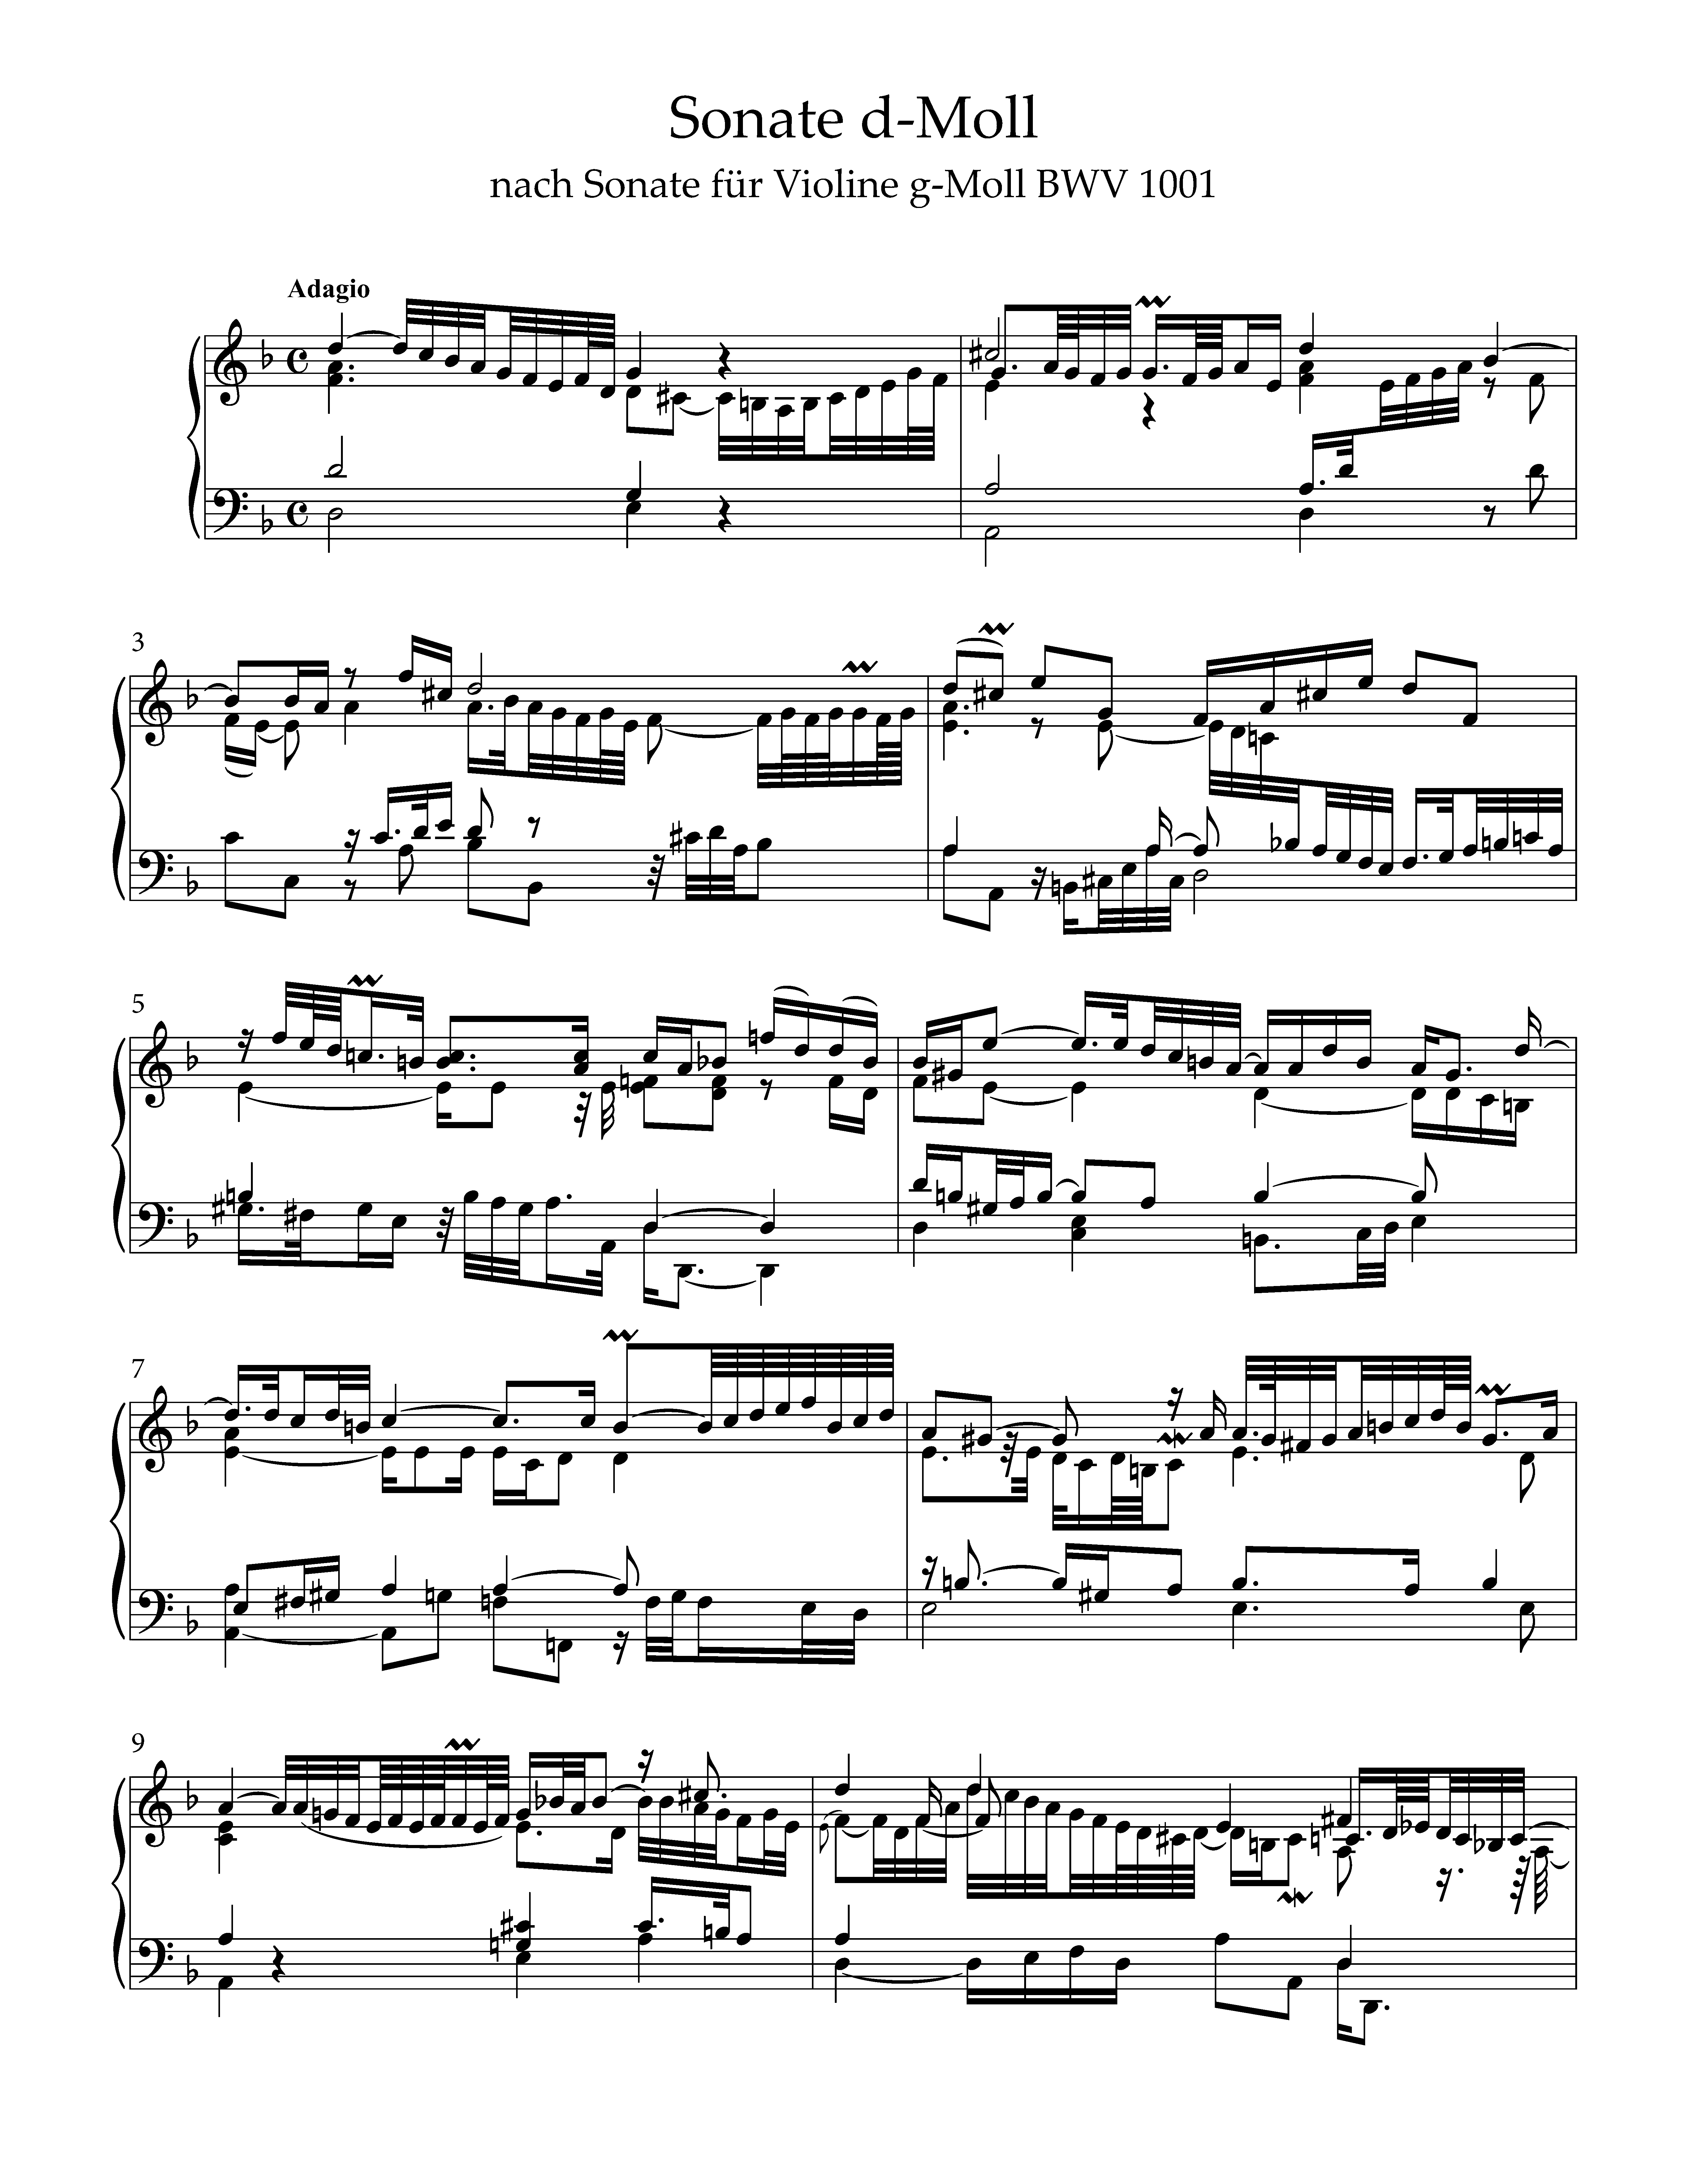 01 - Full score - Sonate d-Moll - 001.png